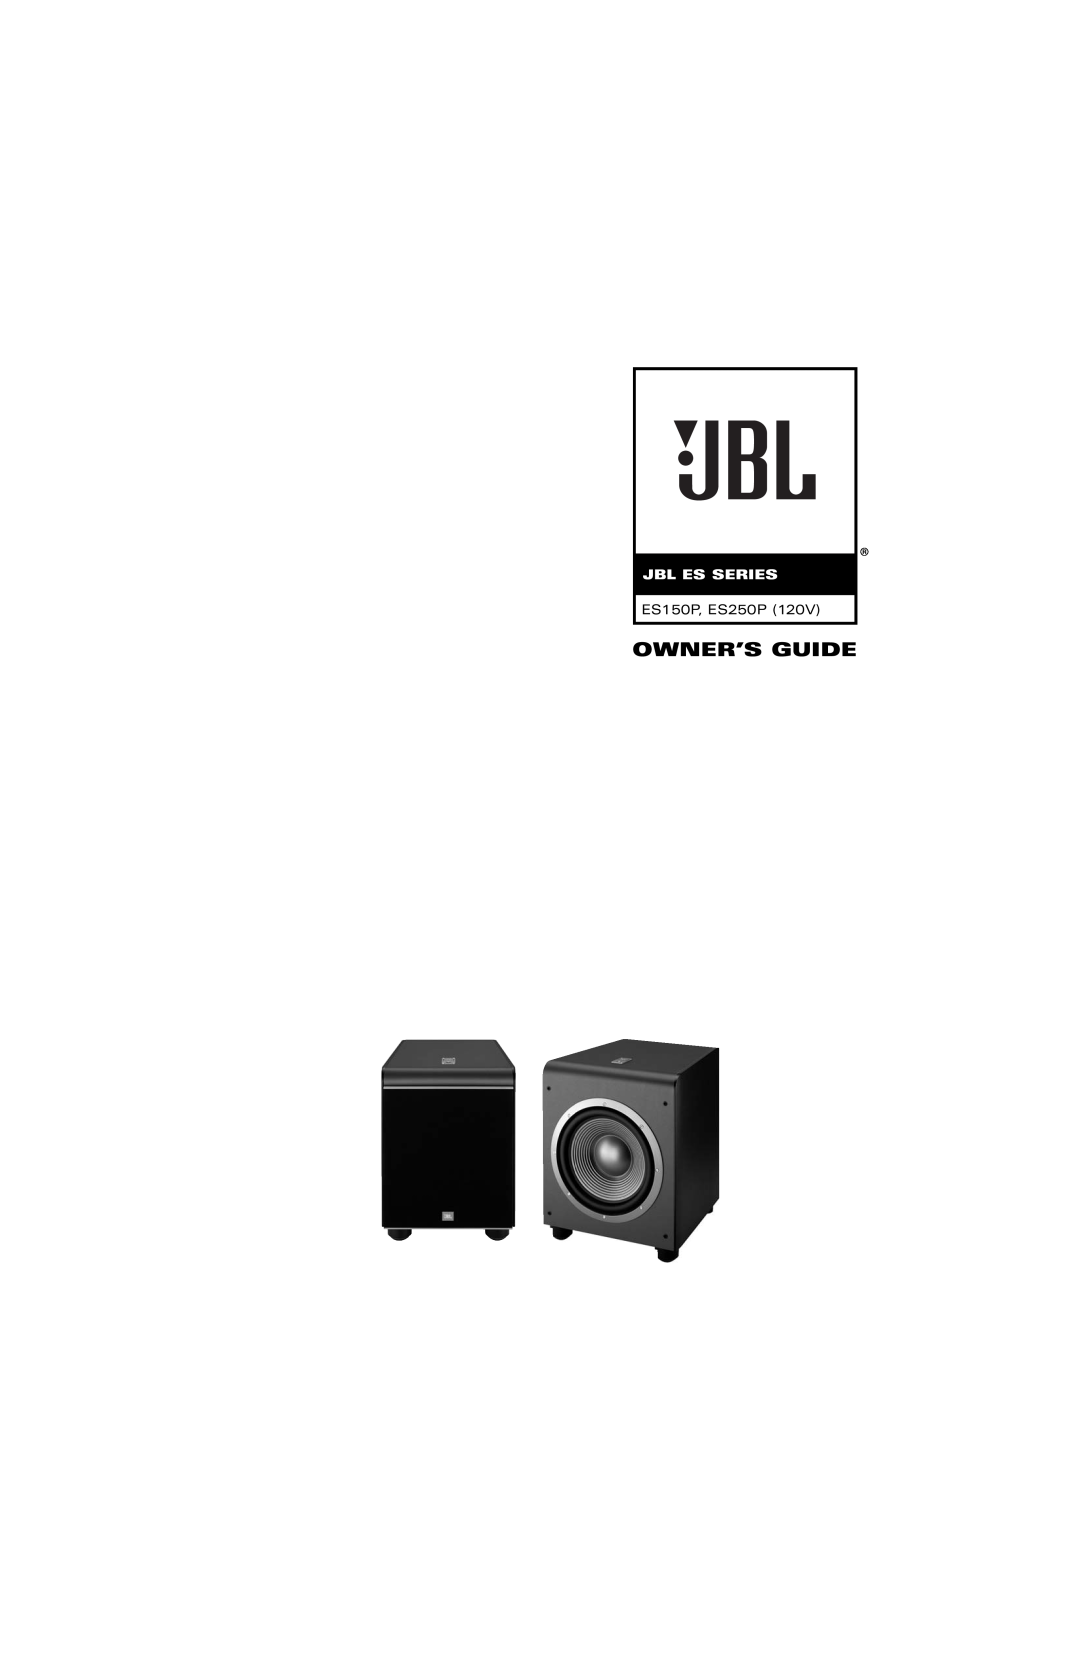 JBL ES250P (120V) manual Owner’S Guide, Jbl Es Series 